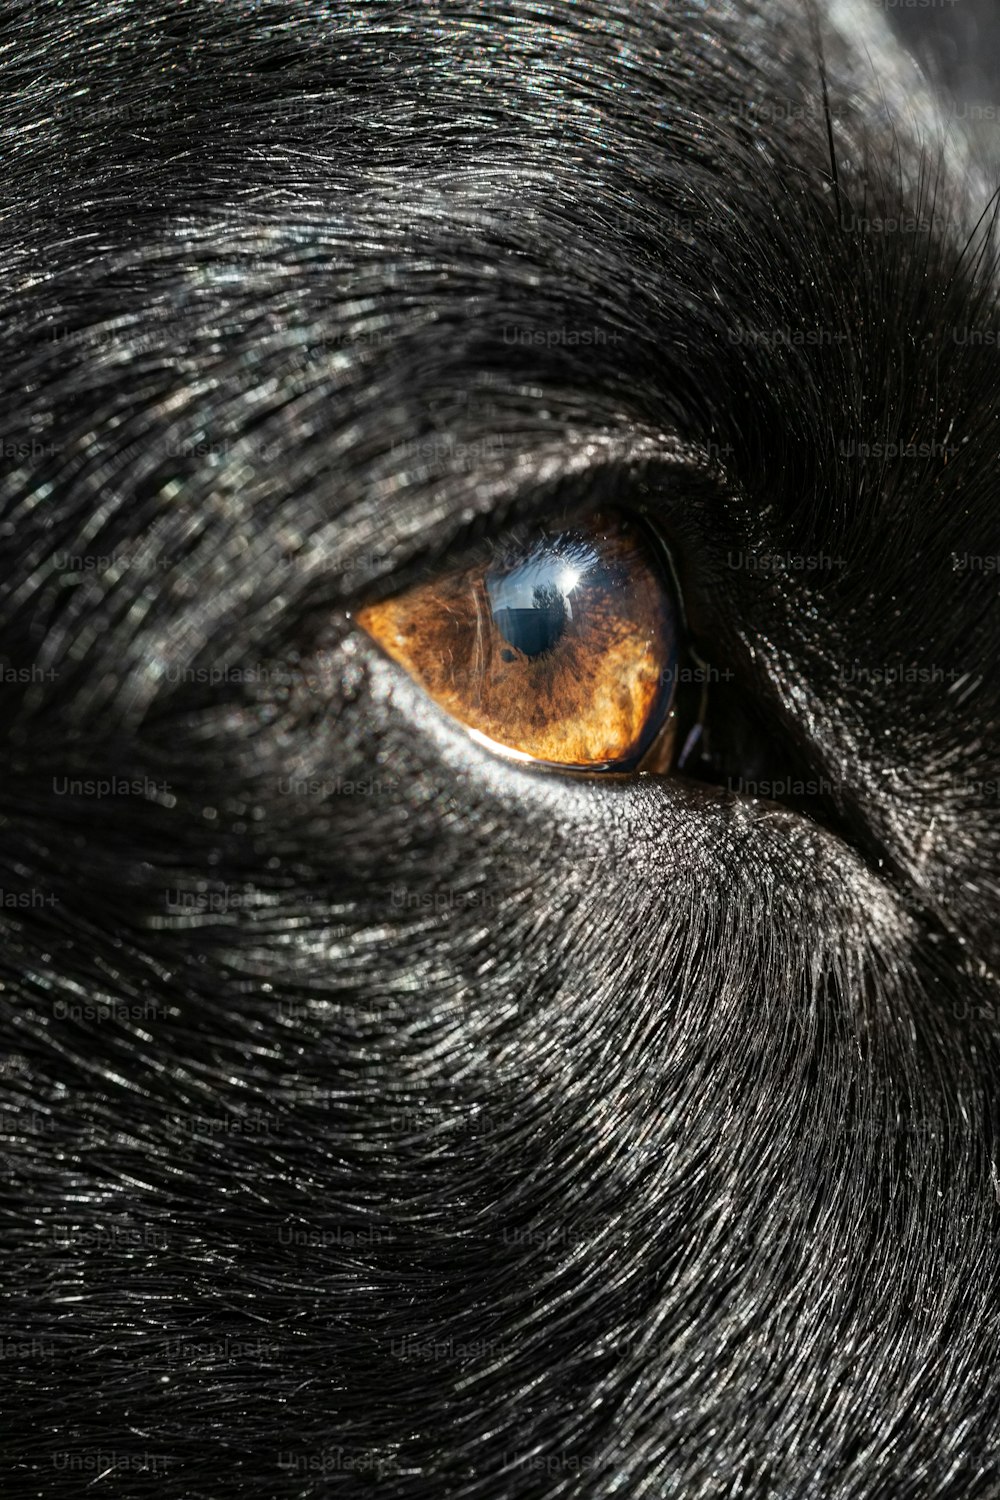 a close up of a black cat's eye